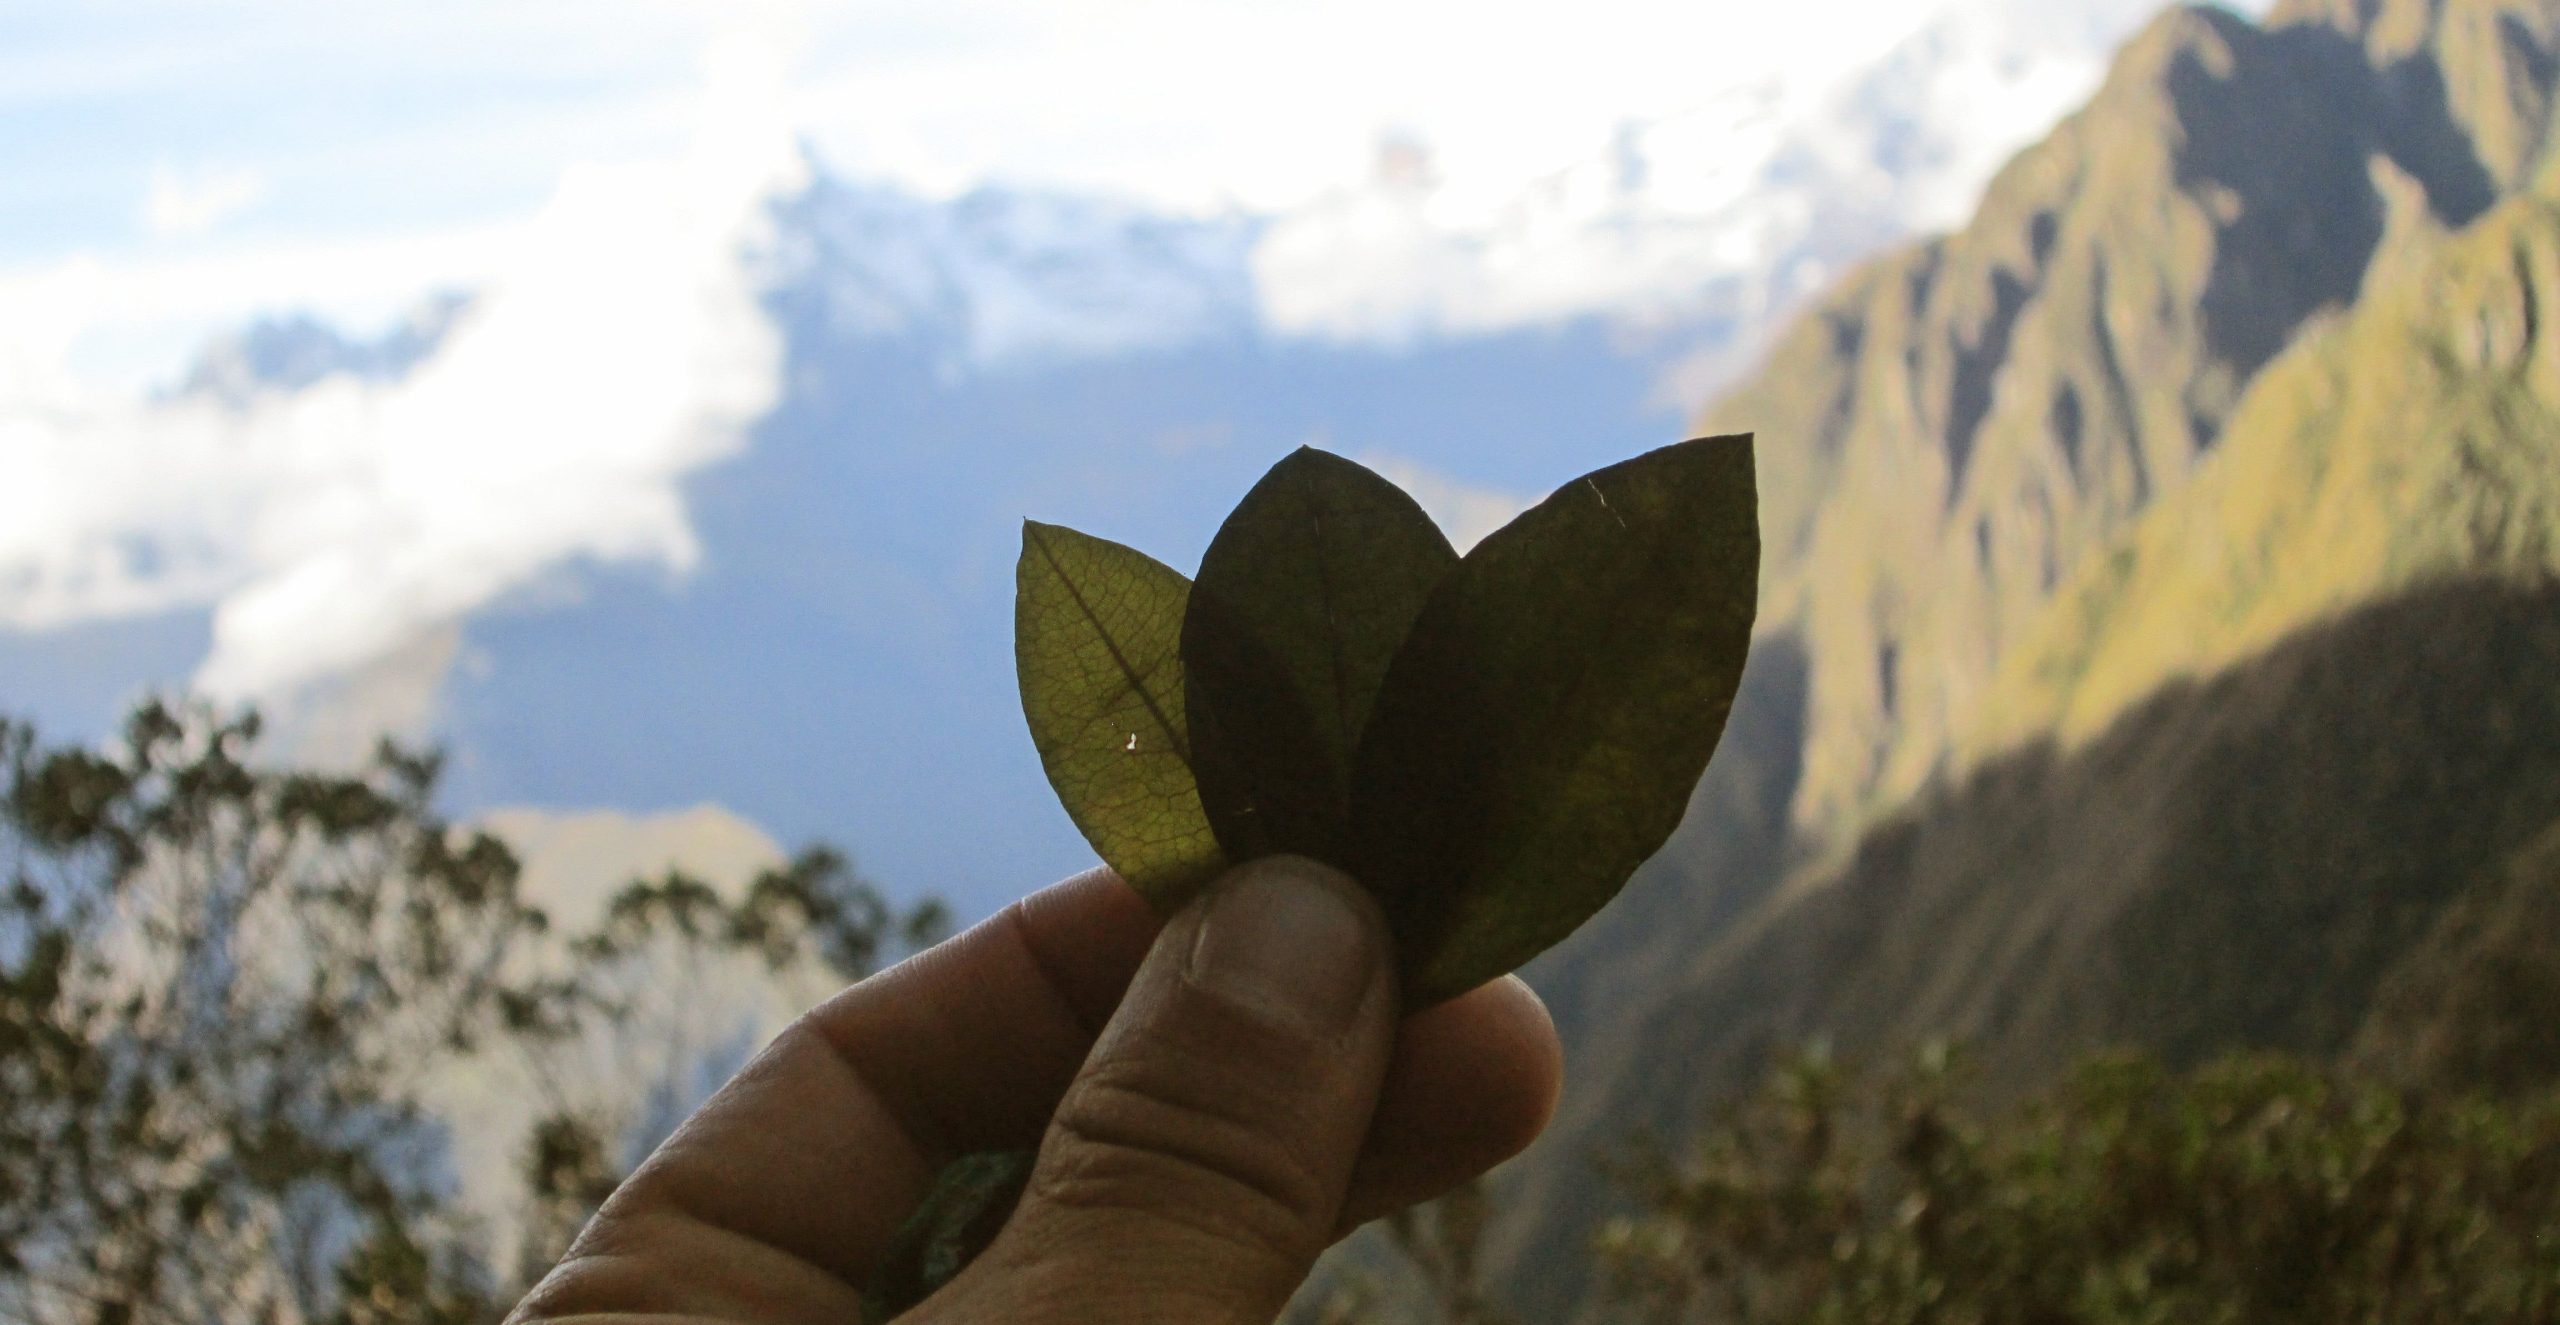 Coca leaves for preventing altitude sickness in Peru